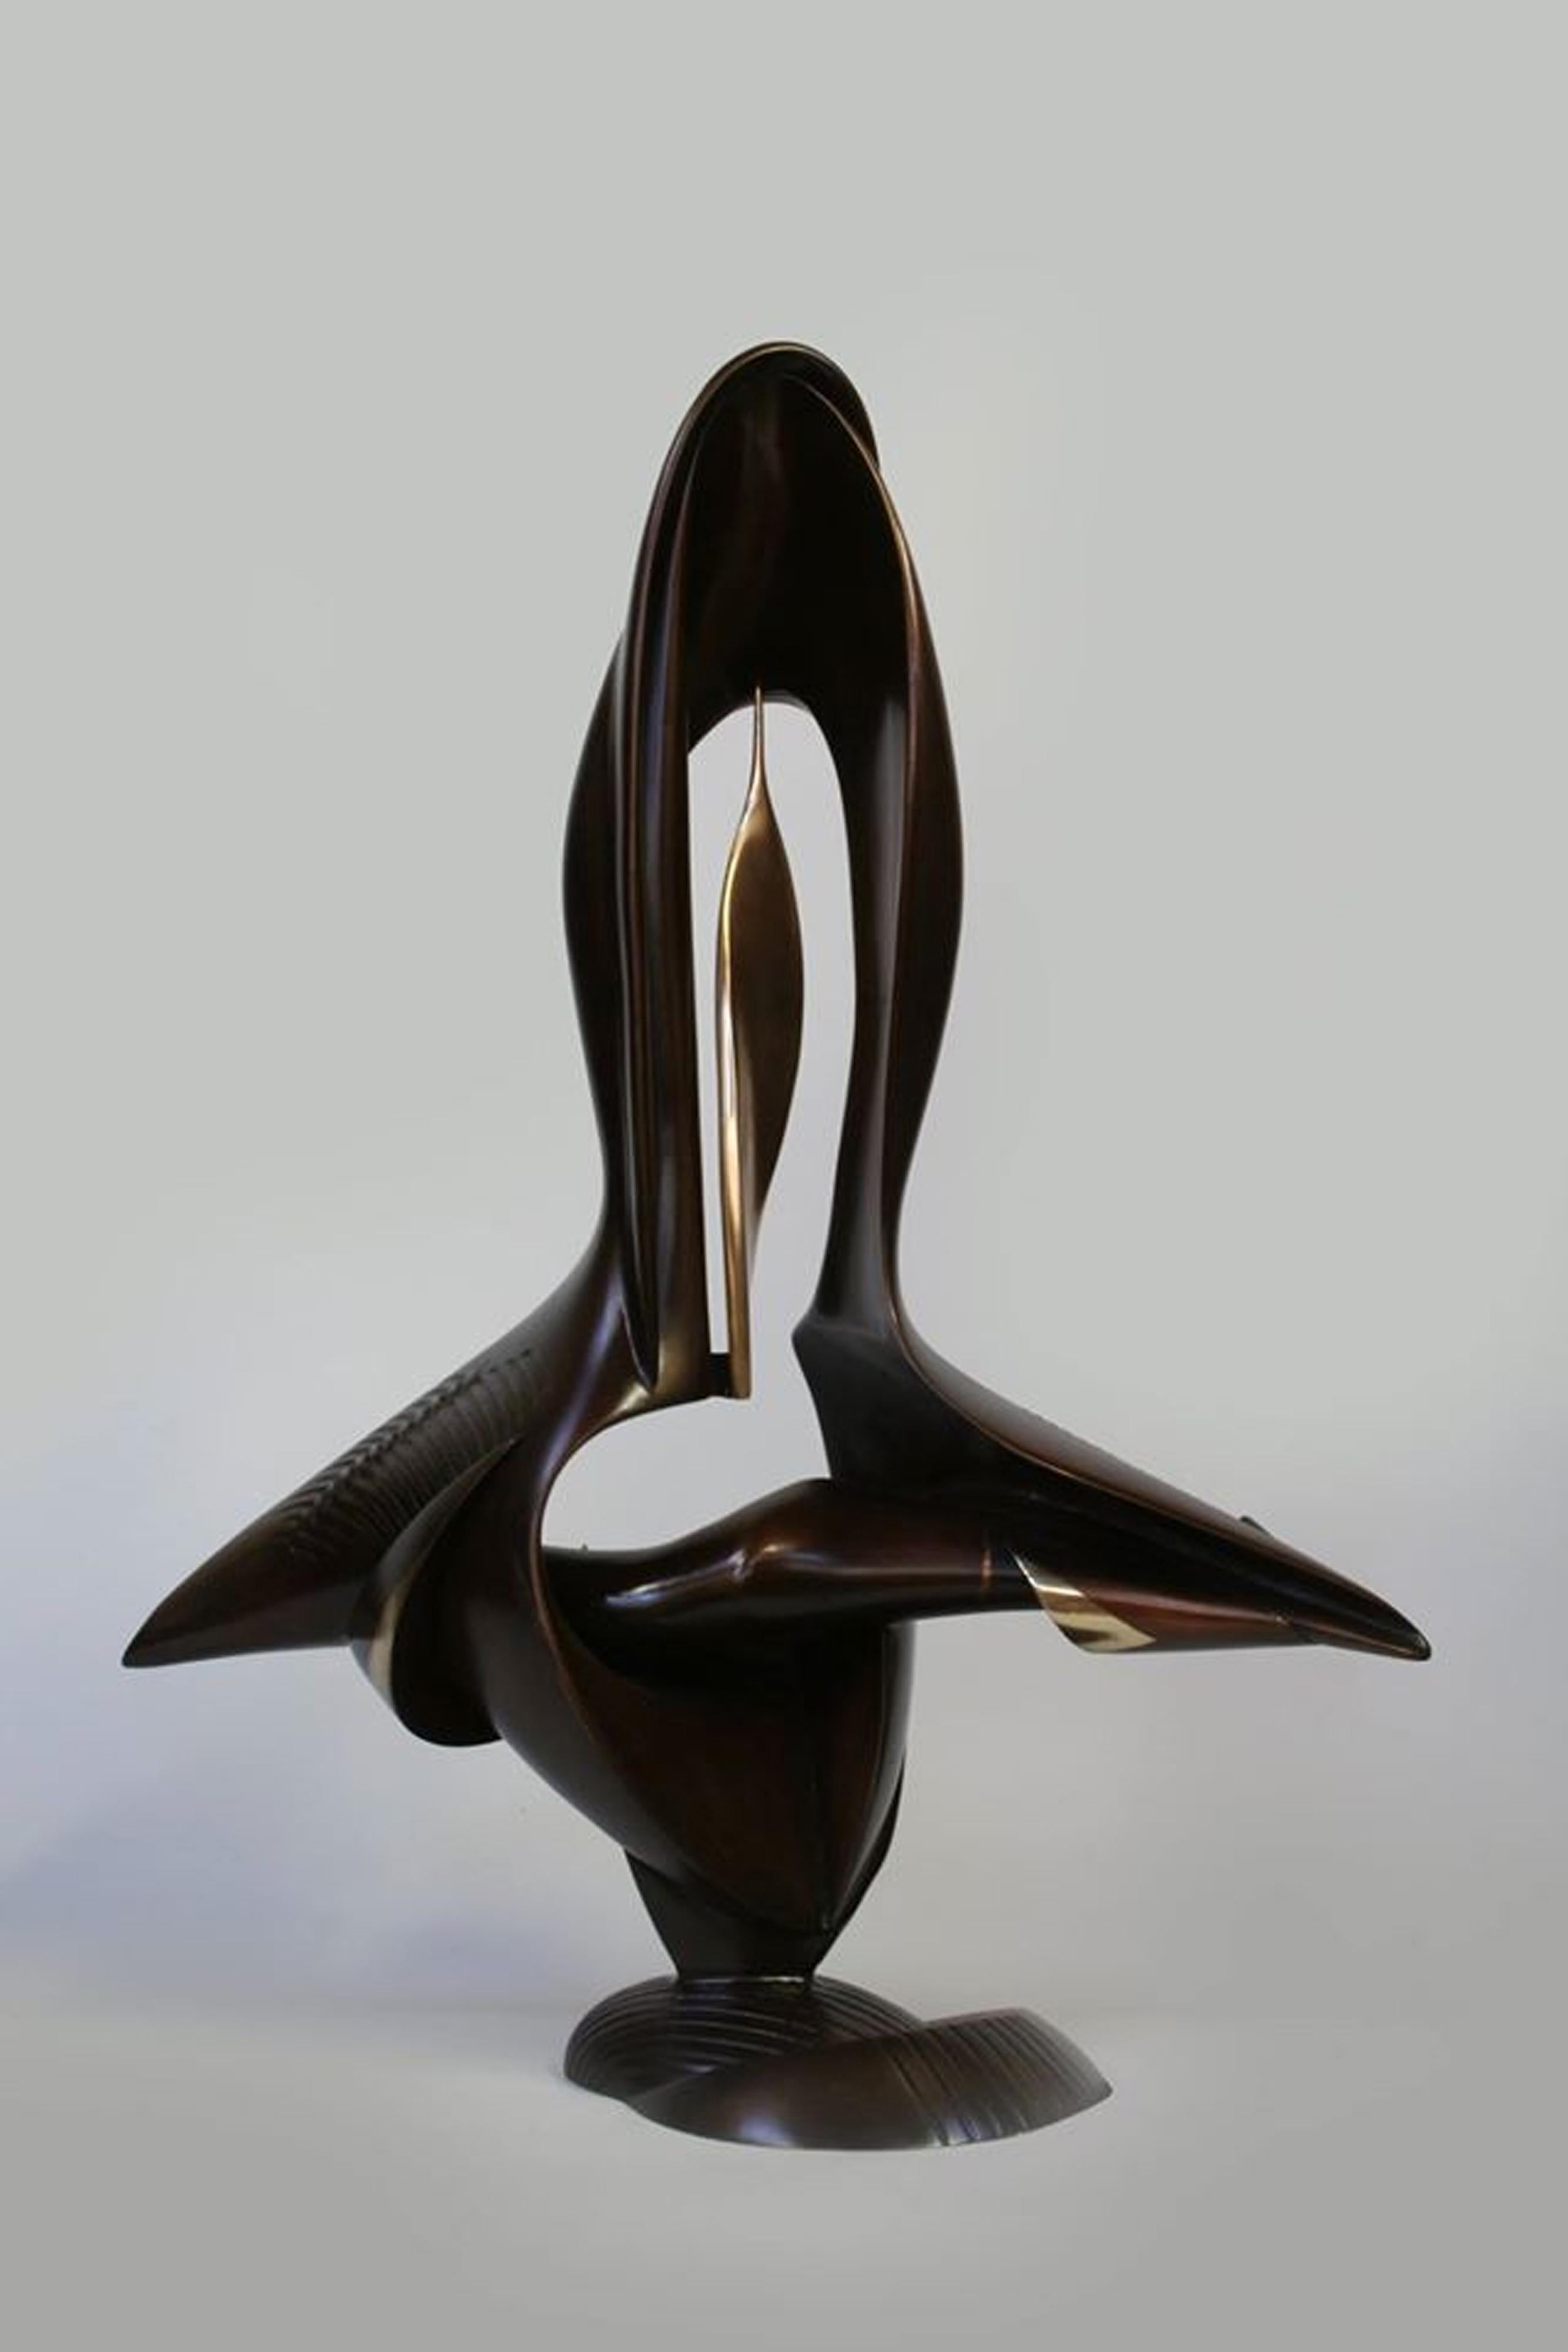 OASIS - Sculpture by Yevgeniy Prokopov